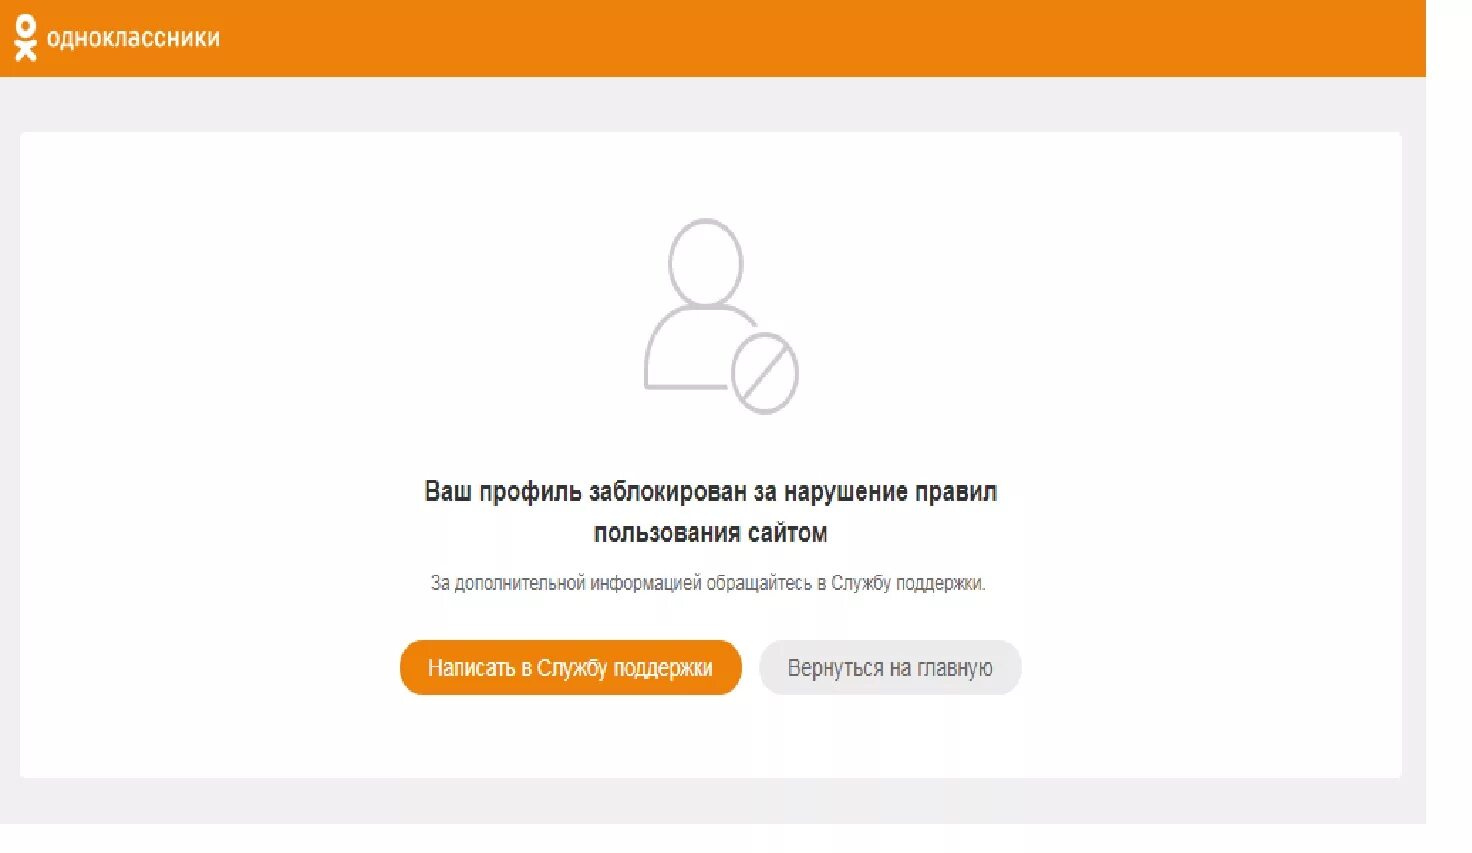 Заблокировали страницу за нарушение правил сайта. Профиль заблокирован. Страница удалена Одноклассники. Ваш профиль заблокирован. Удалённая страница в Одноклассниках.